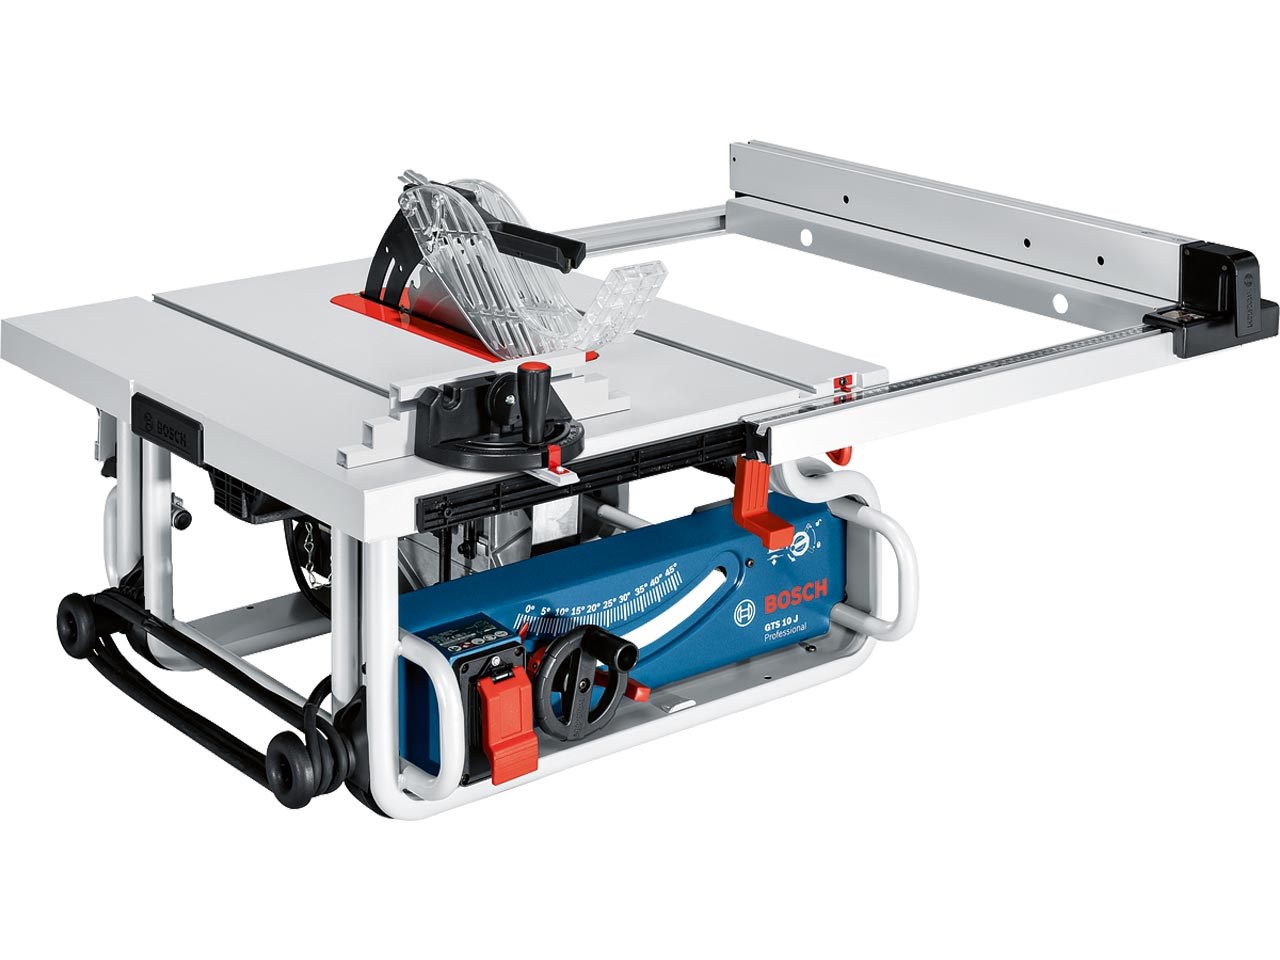 Bosch Gts10j 110v 1800w 254mm Professional Table Saw